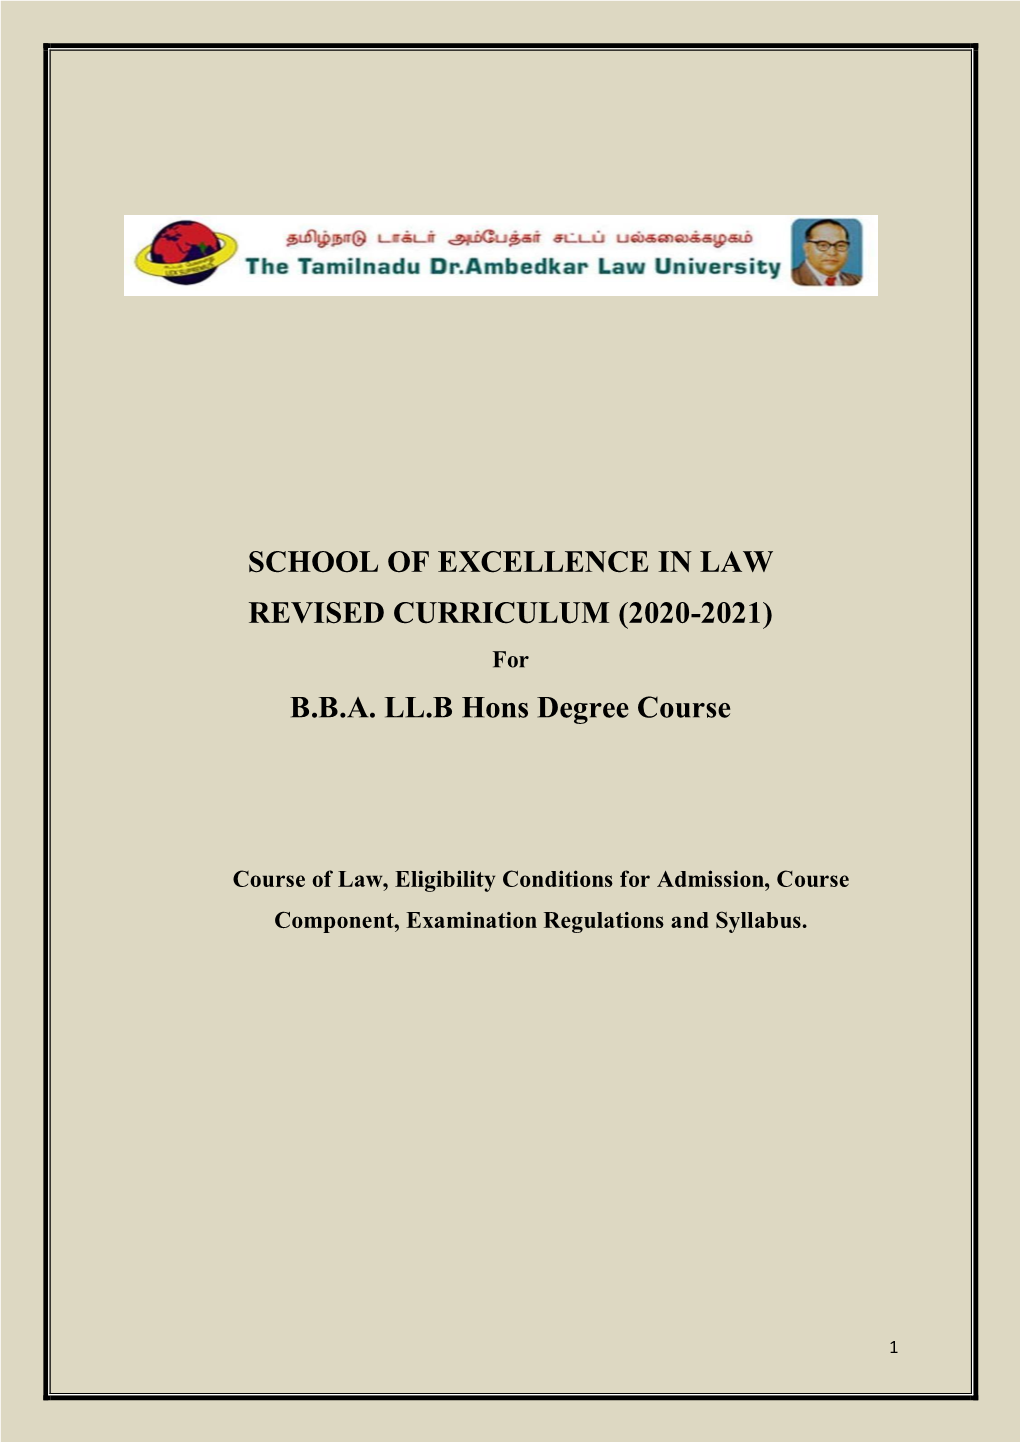 (2020-2021) BBA LL.B Hons Degree Course